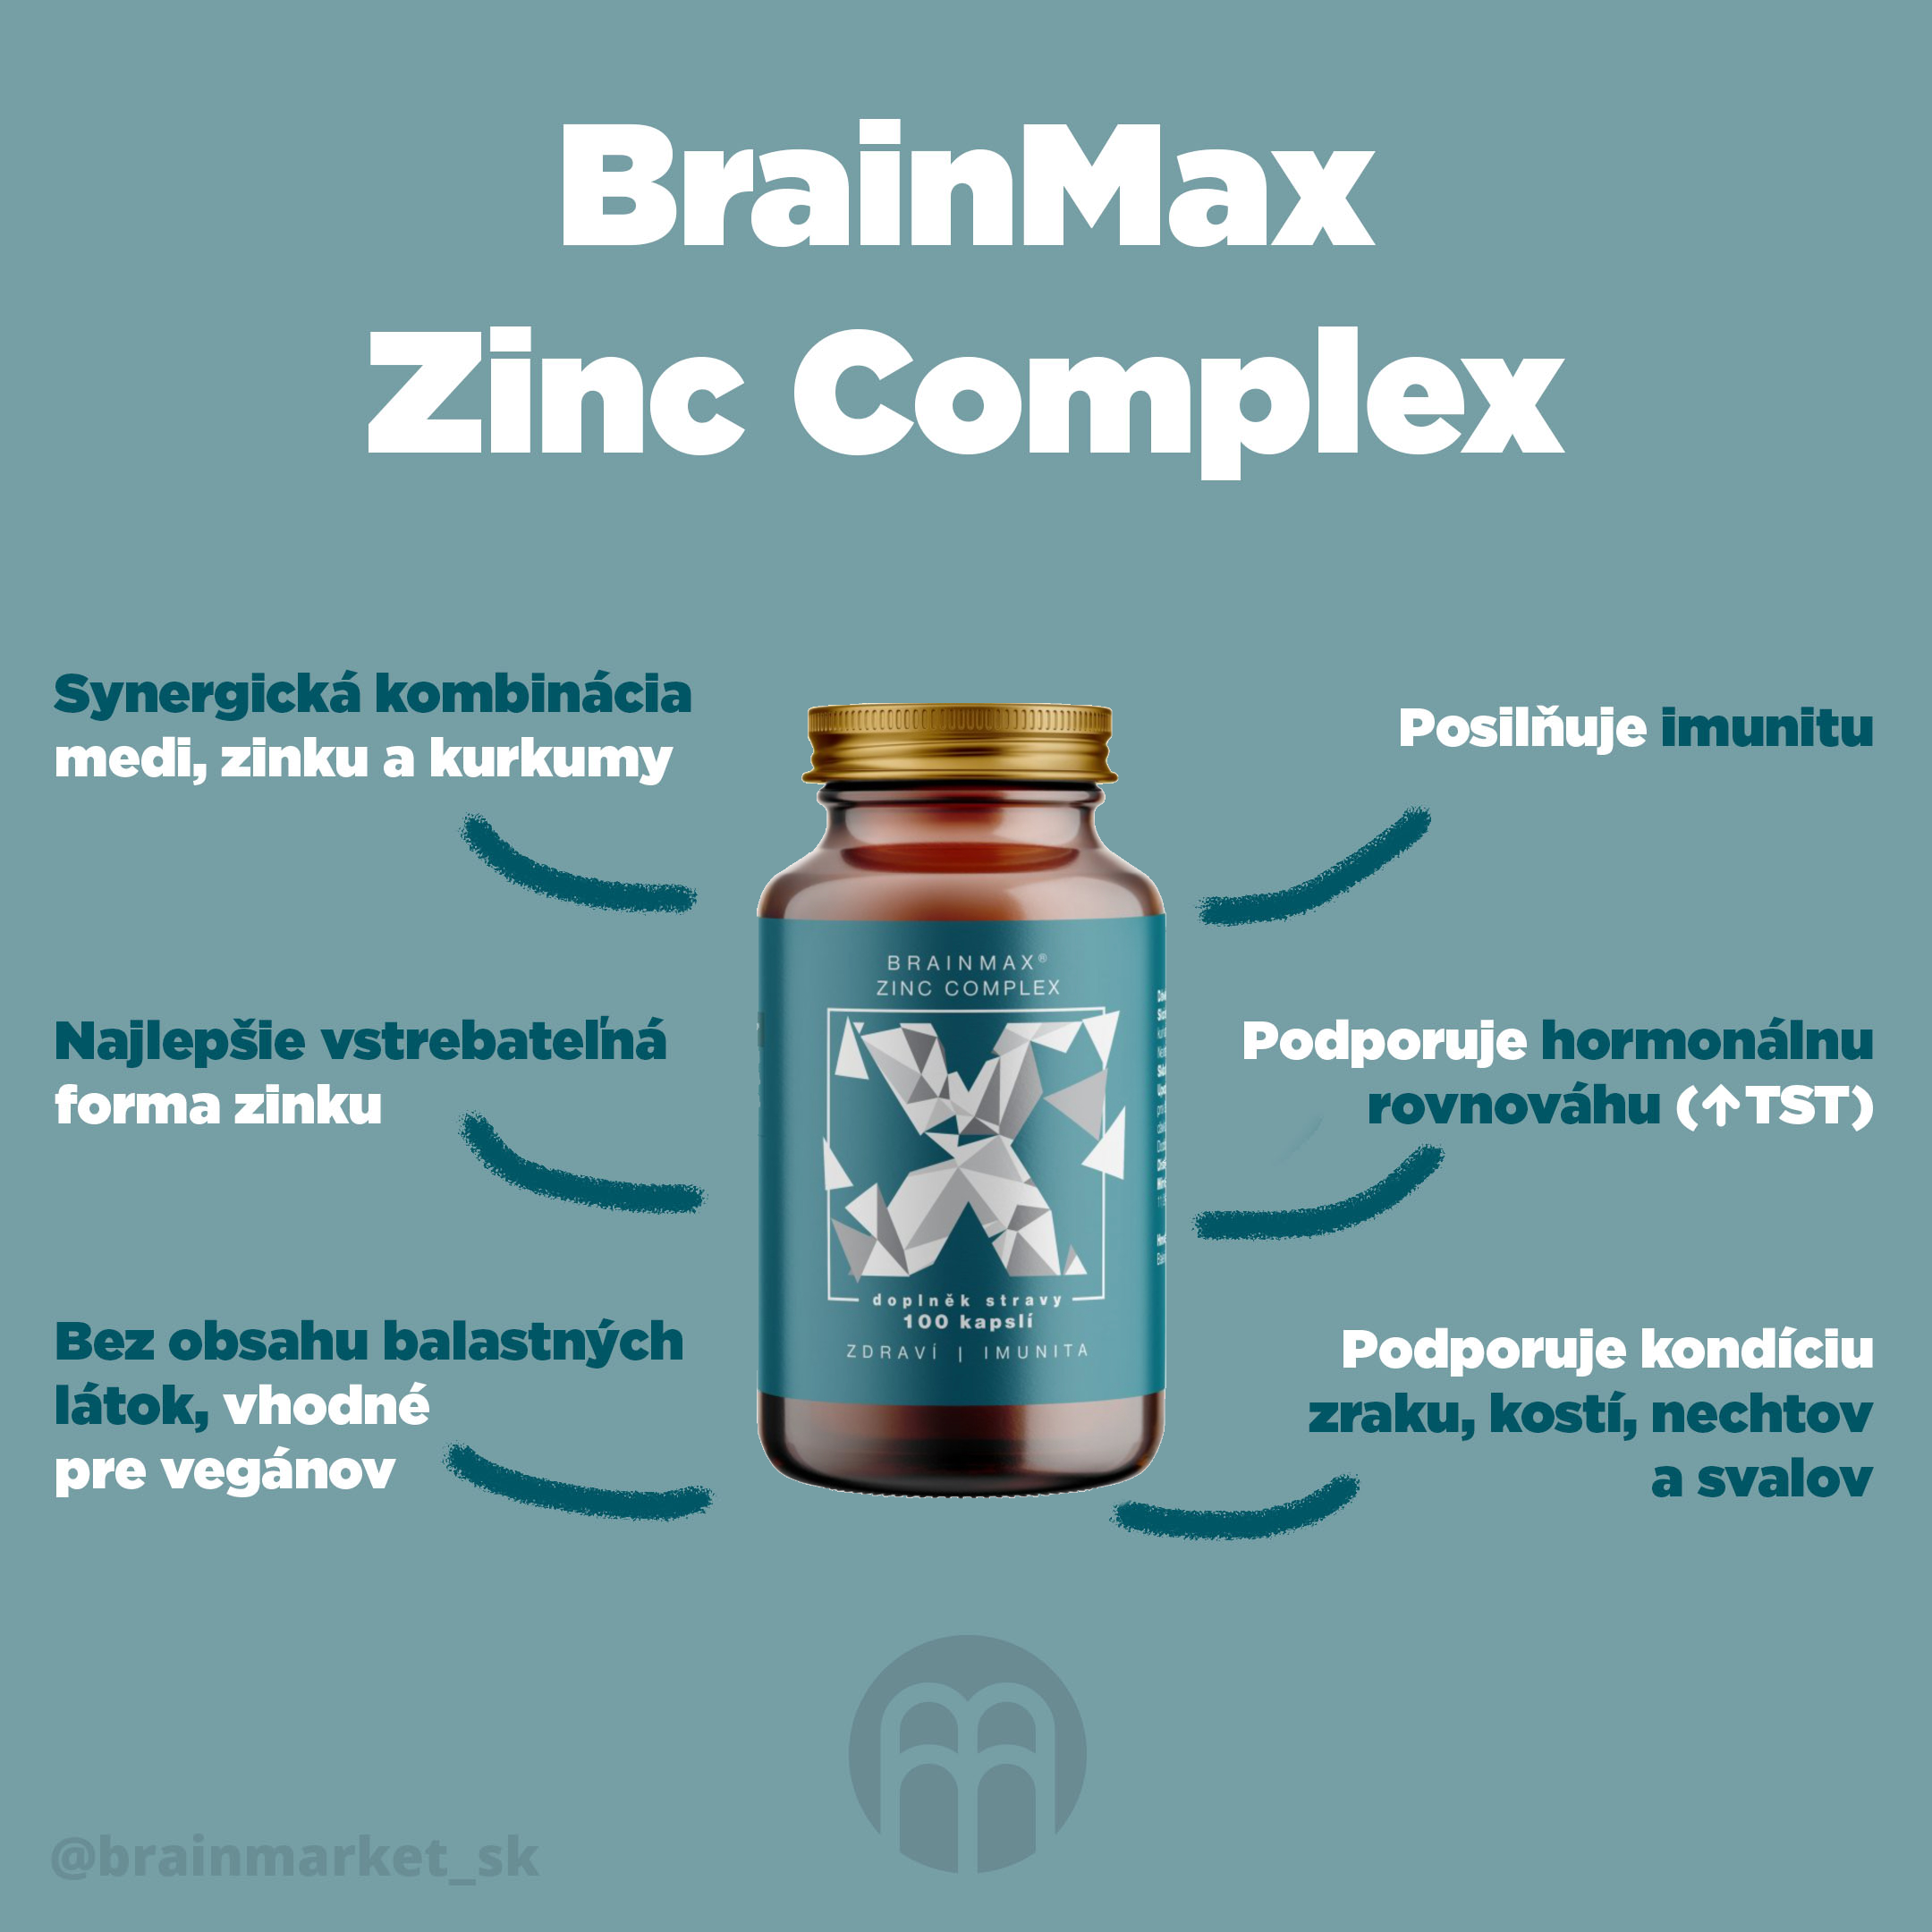 brainmax_zinc_complex_ucinky_Infografika-BrainMarket-2_SK